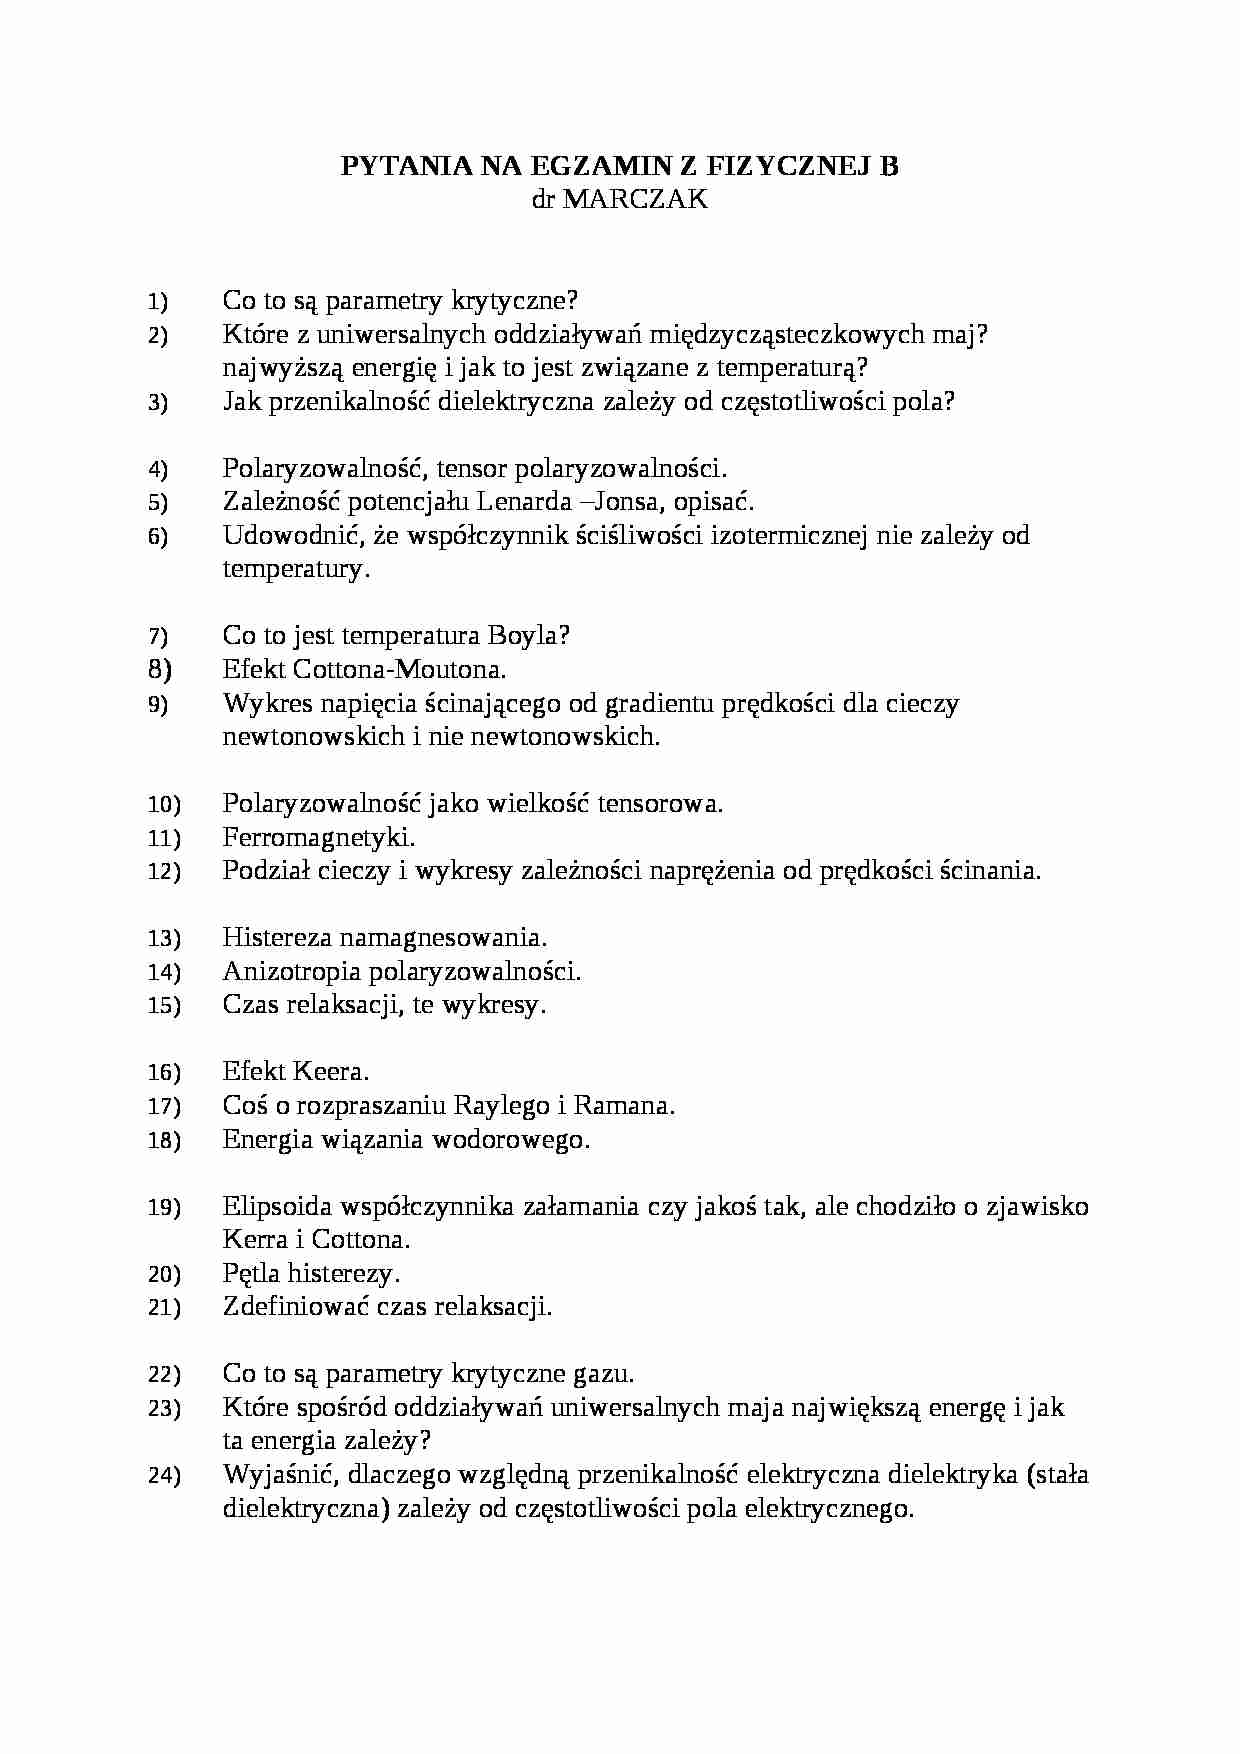 Chemia fizyczna - pytania na egzamin - strona 1